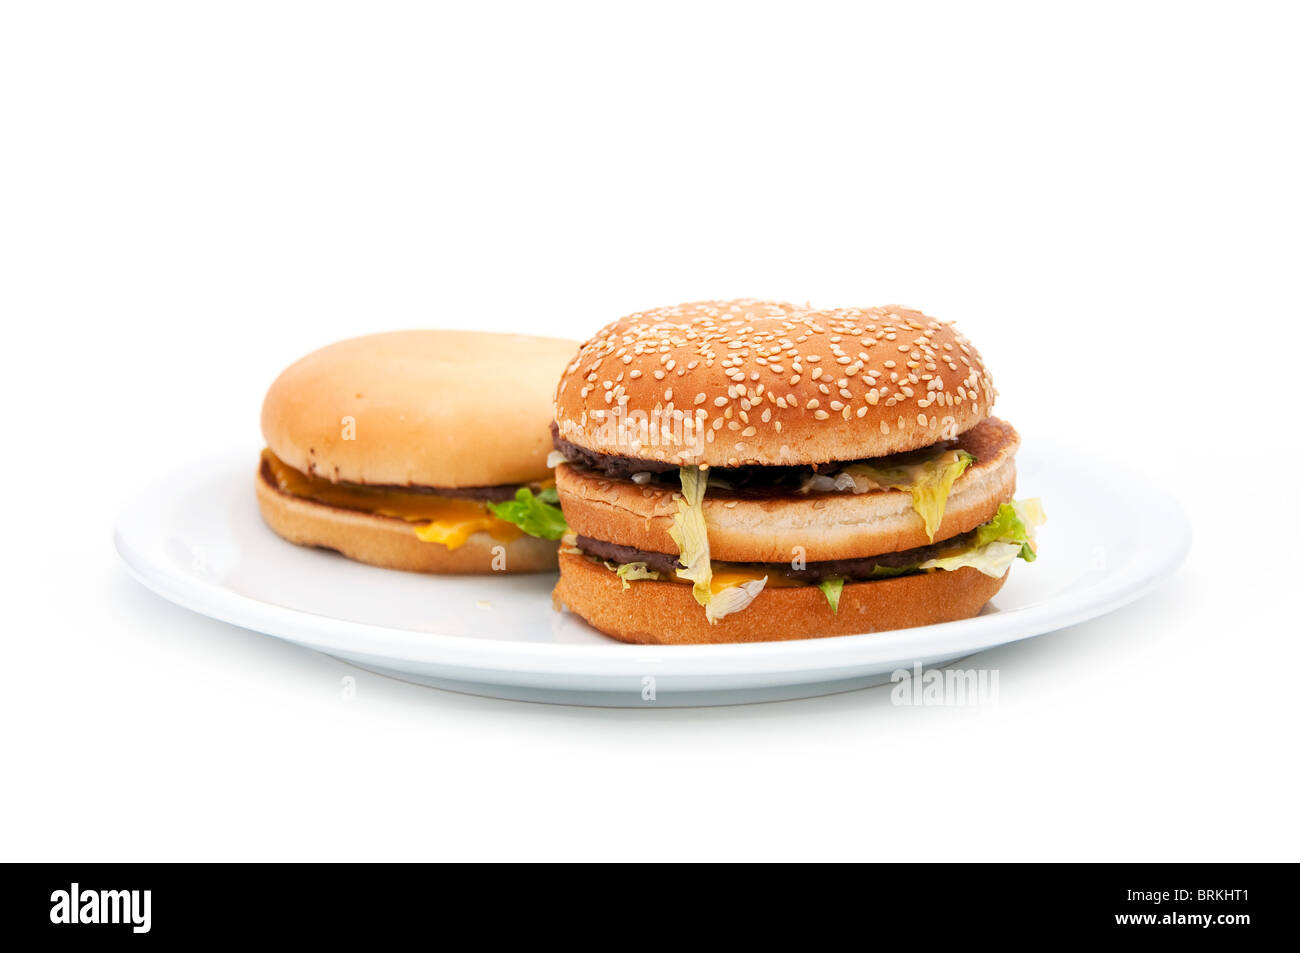 A tasty hamburger and cheeseburger on a plate. Stock Photo